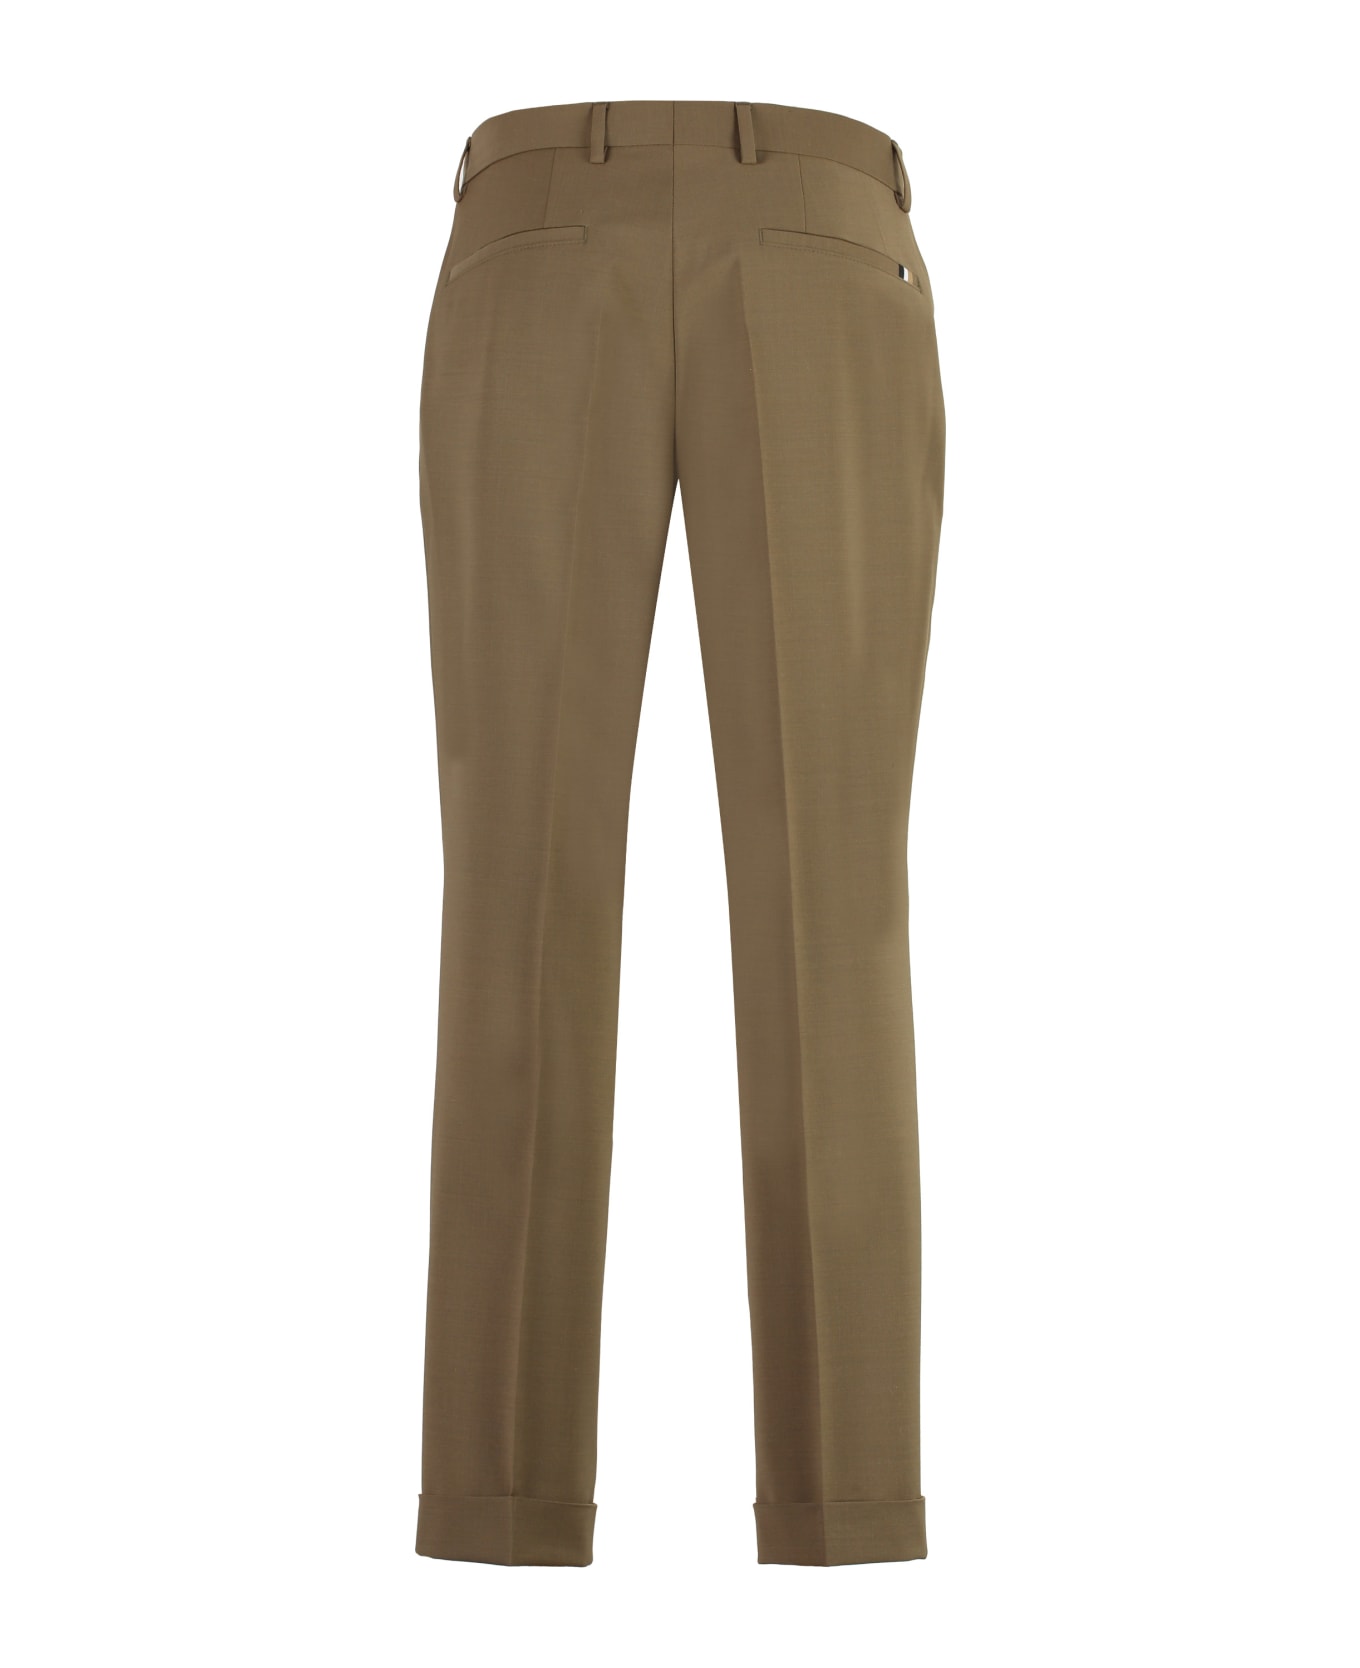 Hugo Boss Slim Fit Chino Trousers - brown ボトムス